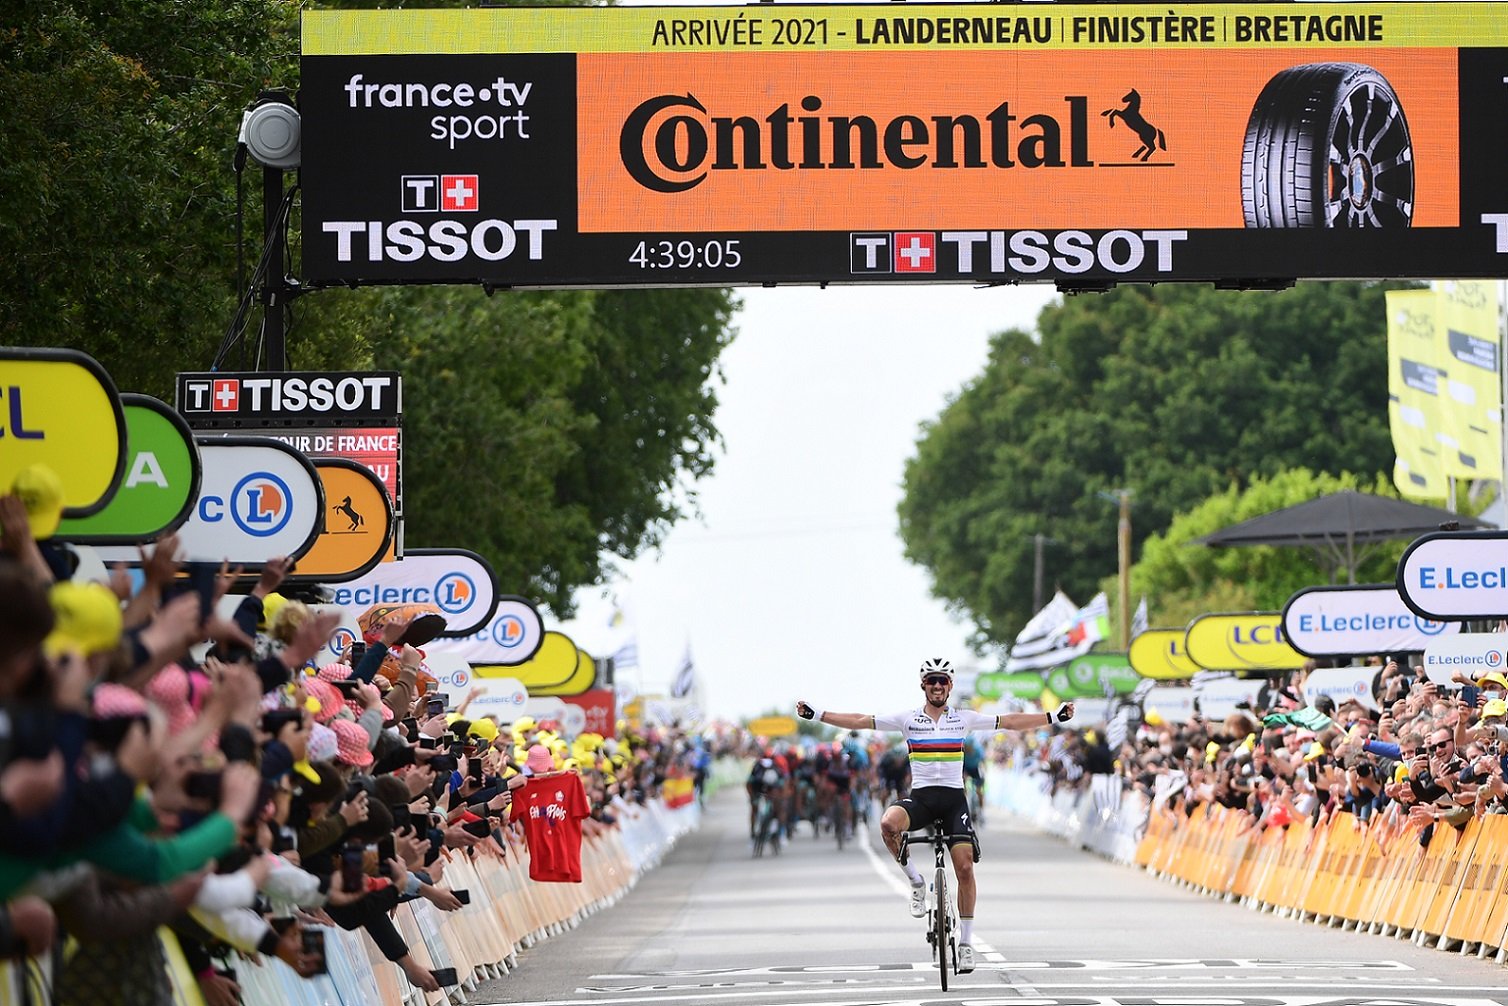 Tour de France and Continental extend their partnership until; 2027